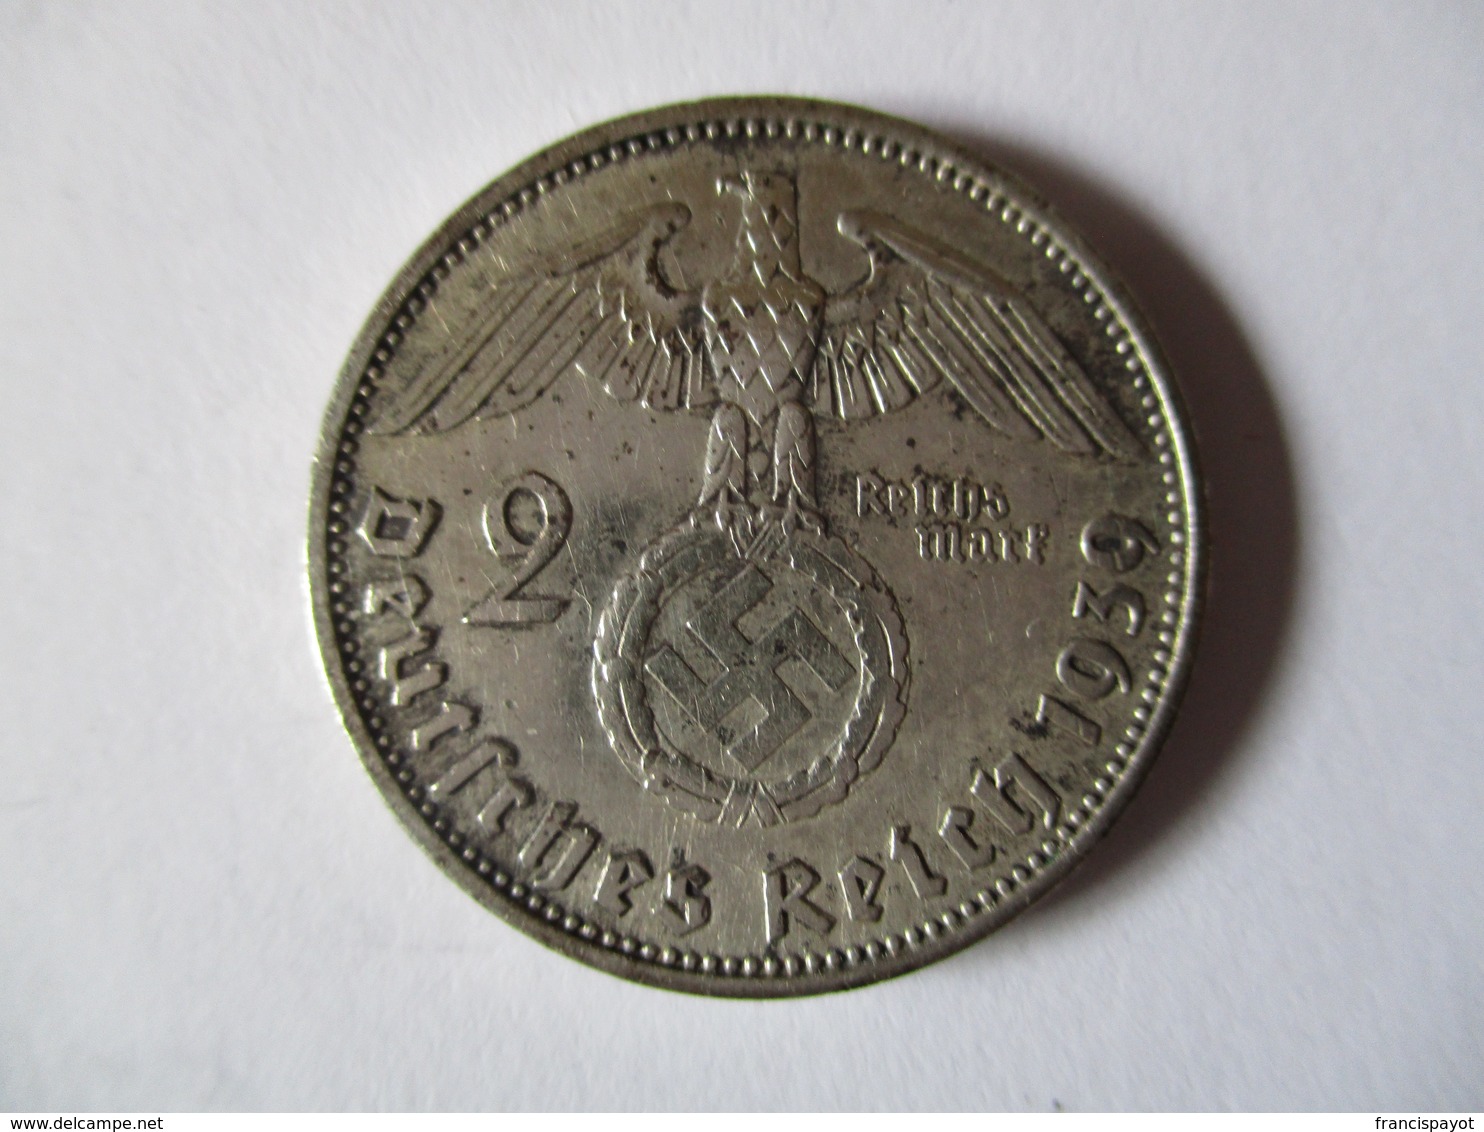 Germany 2 Reich Mark 1939 A - 2 Reichsmark